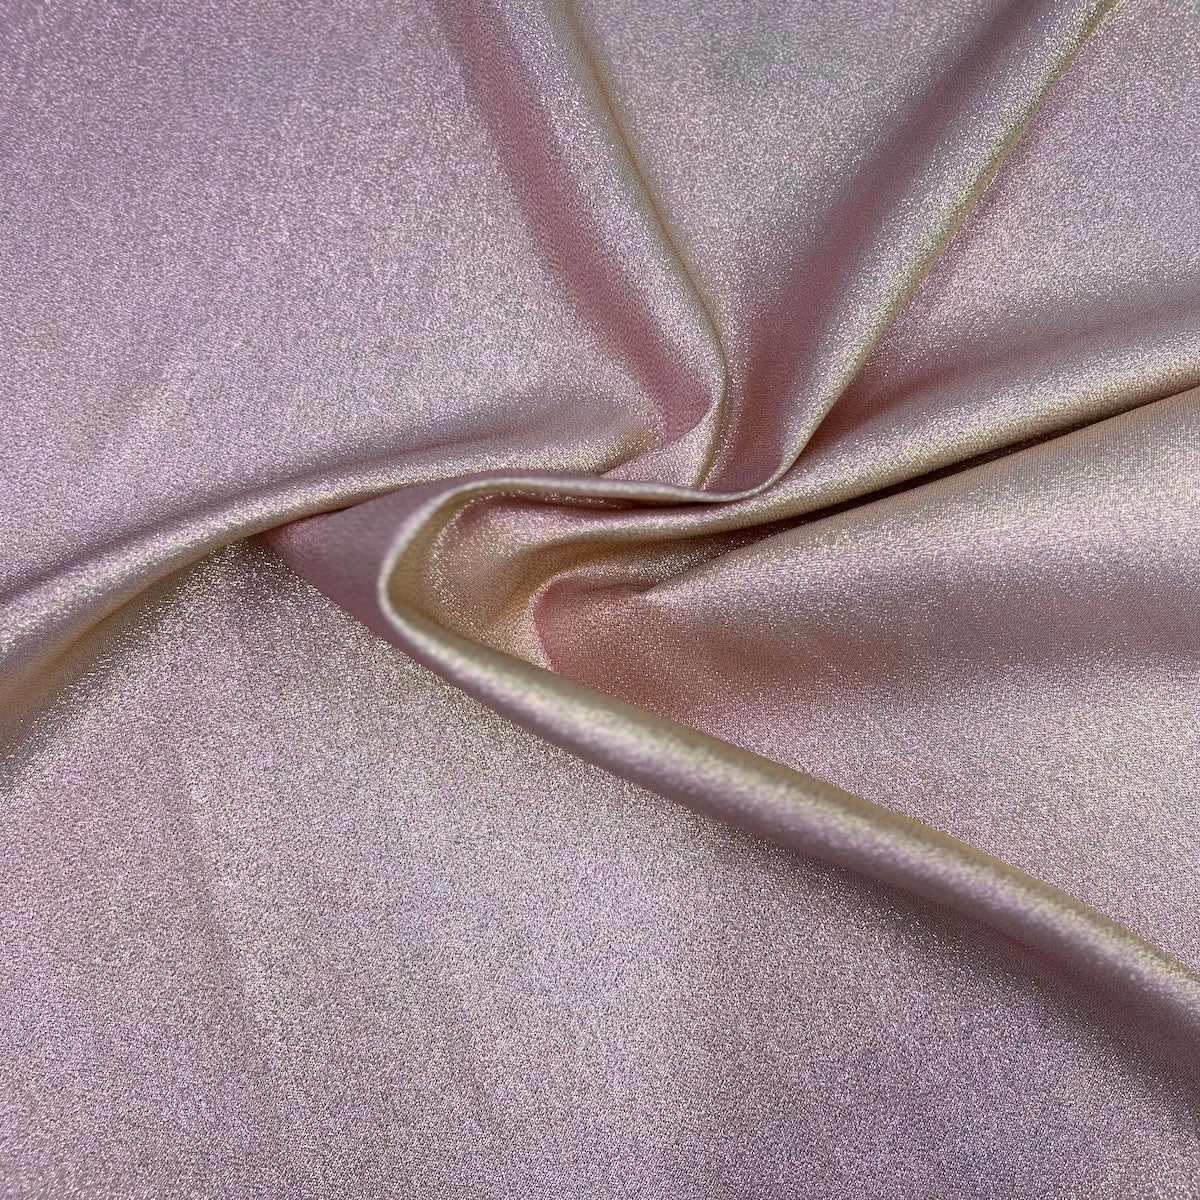 Pink | Gold Iridescent Glitter Lurex Faux Satin Fabric